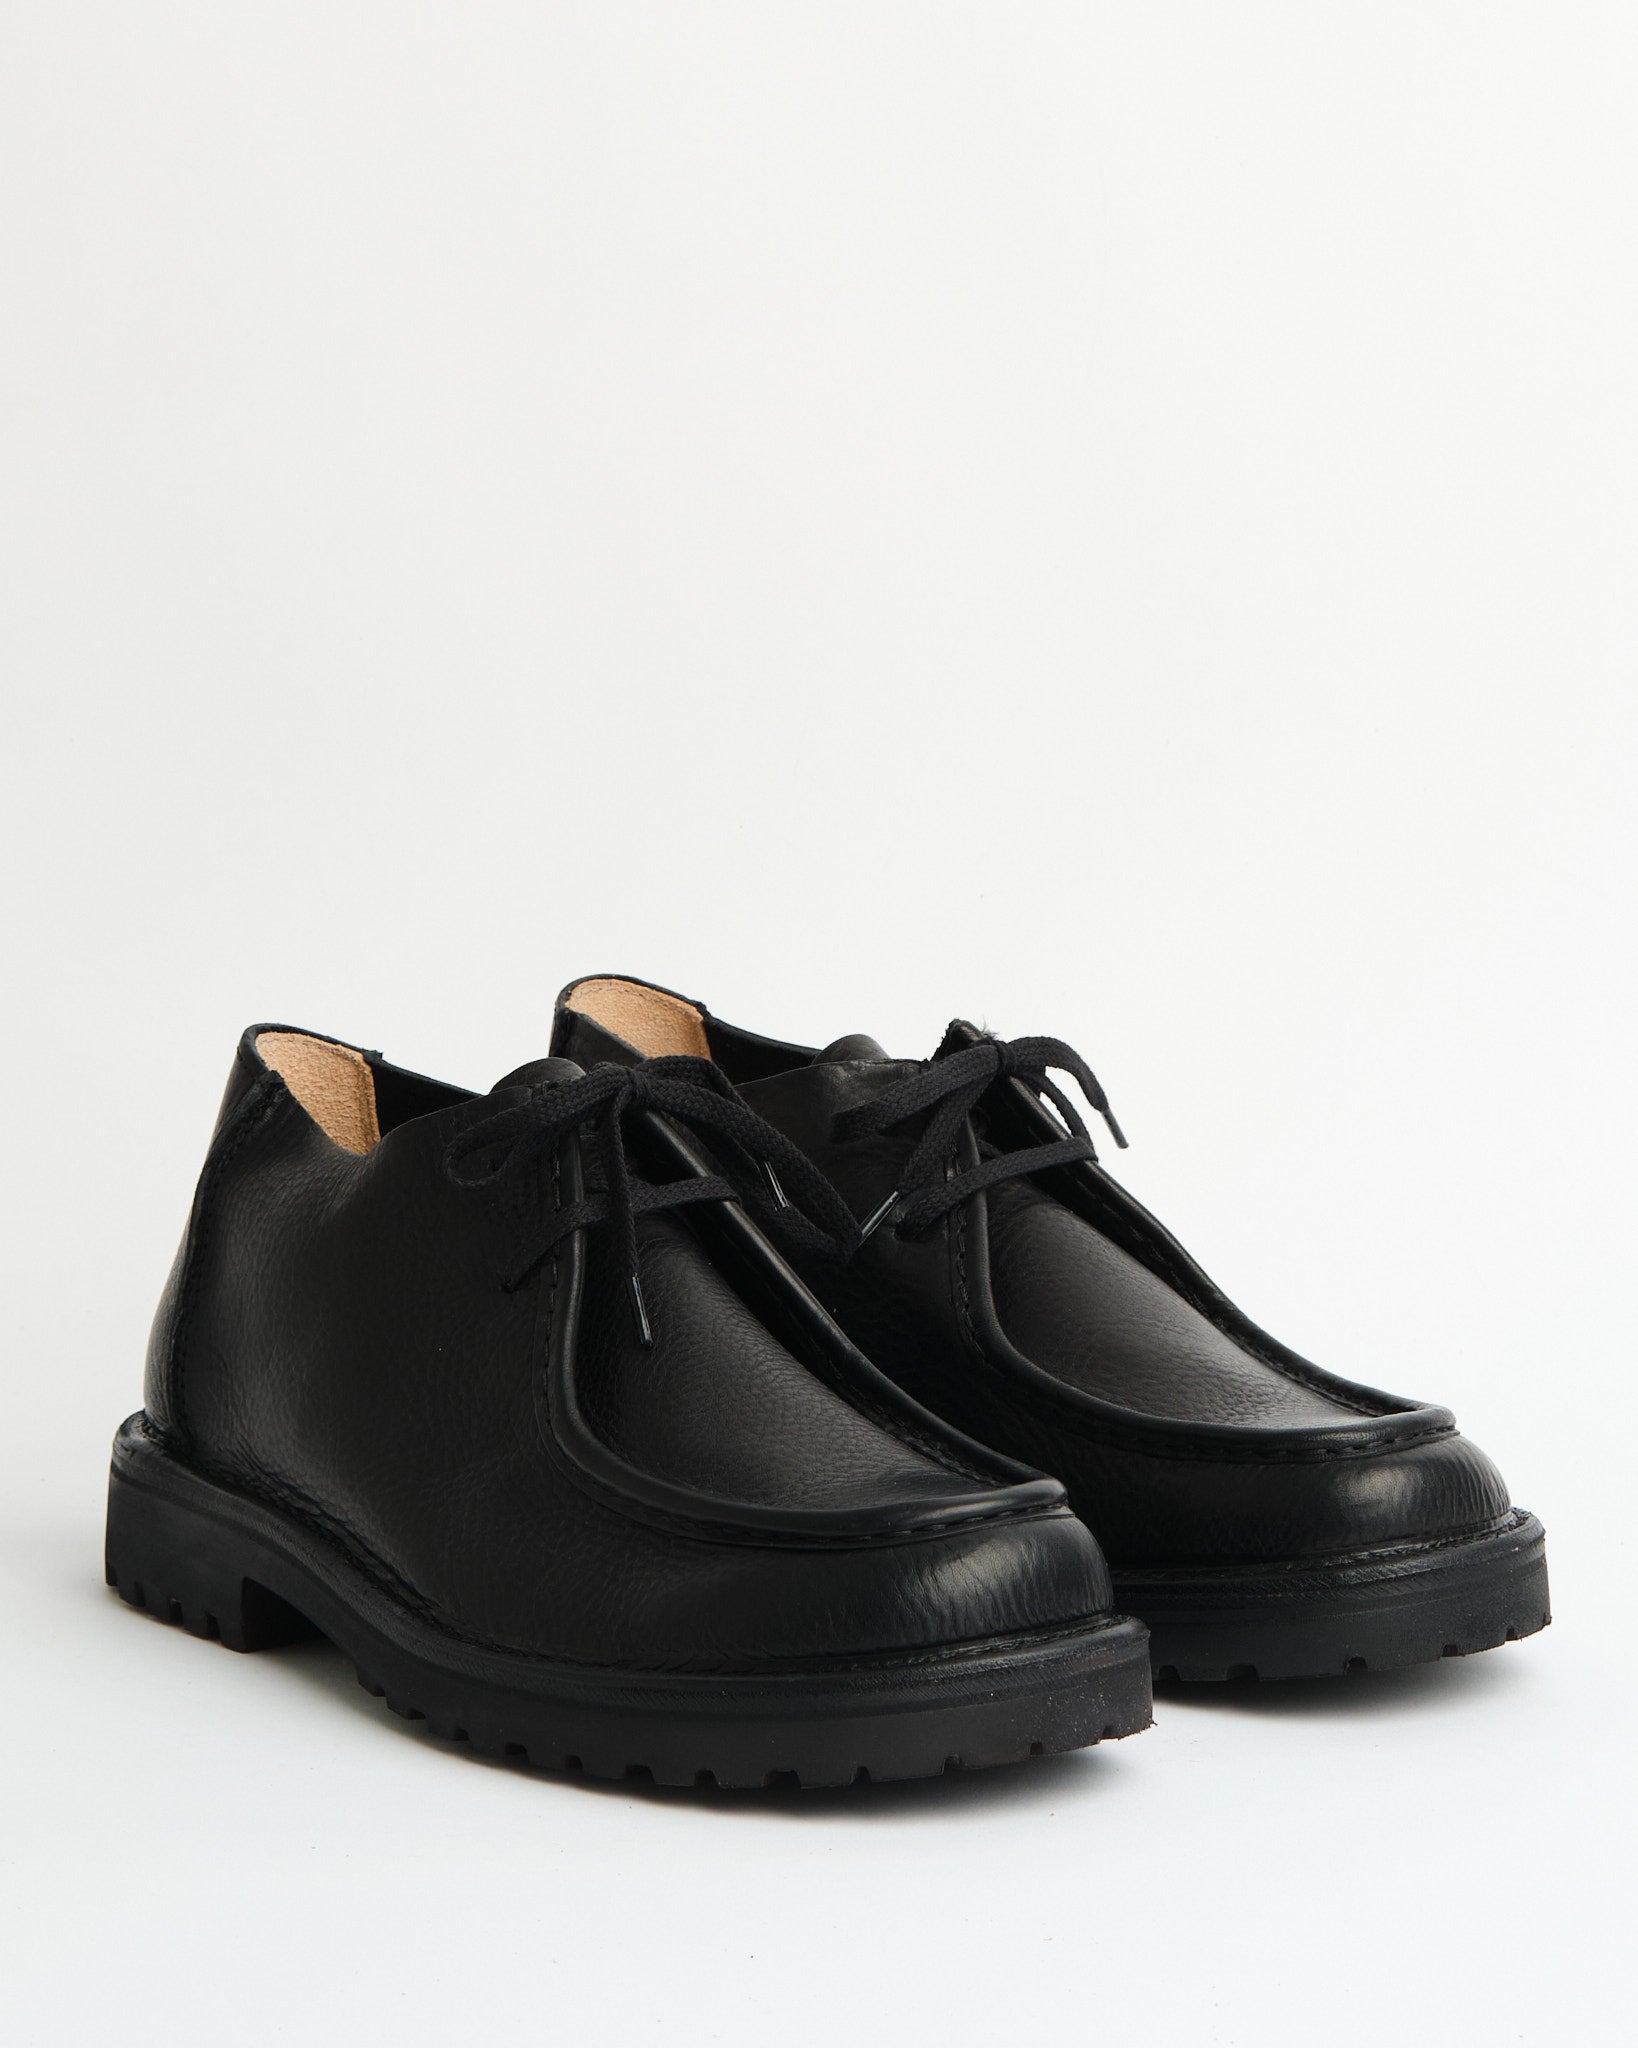 Shop Astorflex Men's Italian Boots & Shoes ▶️ Meadow Store